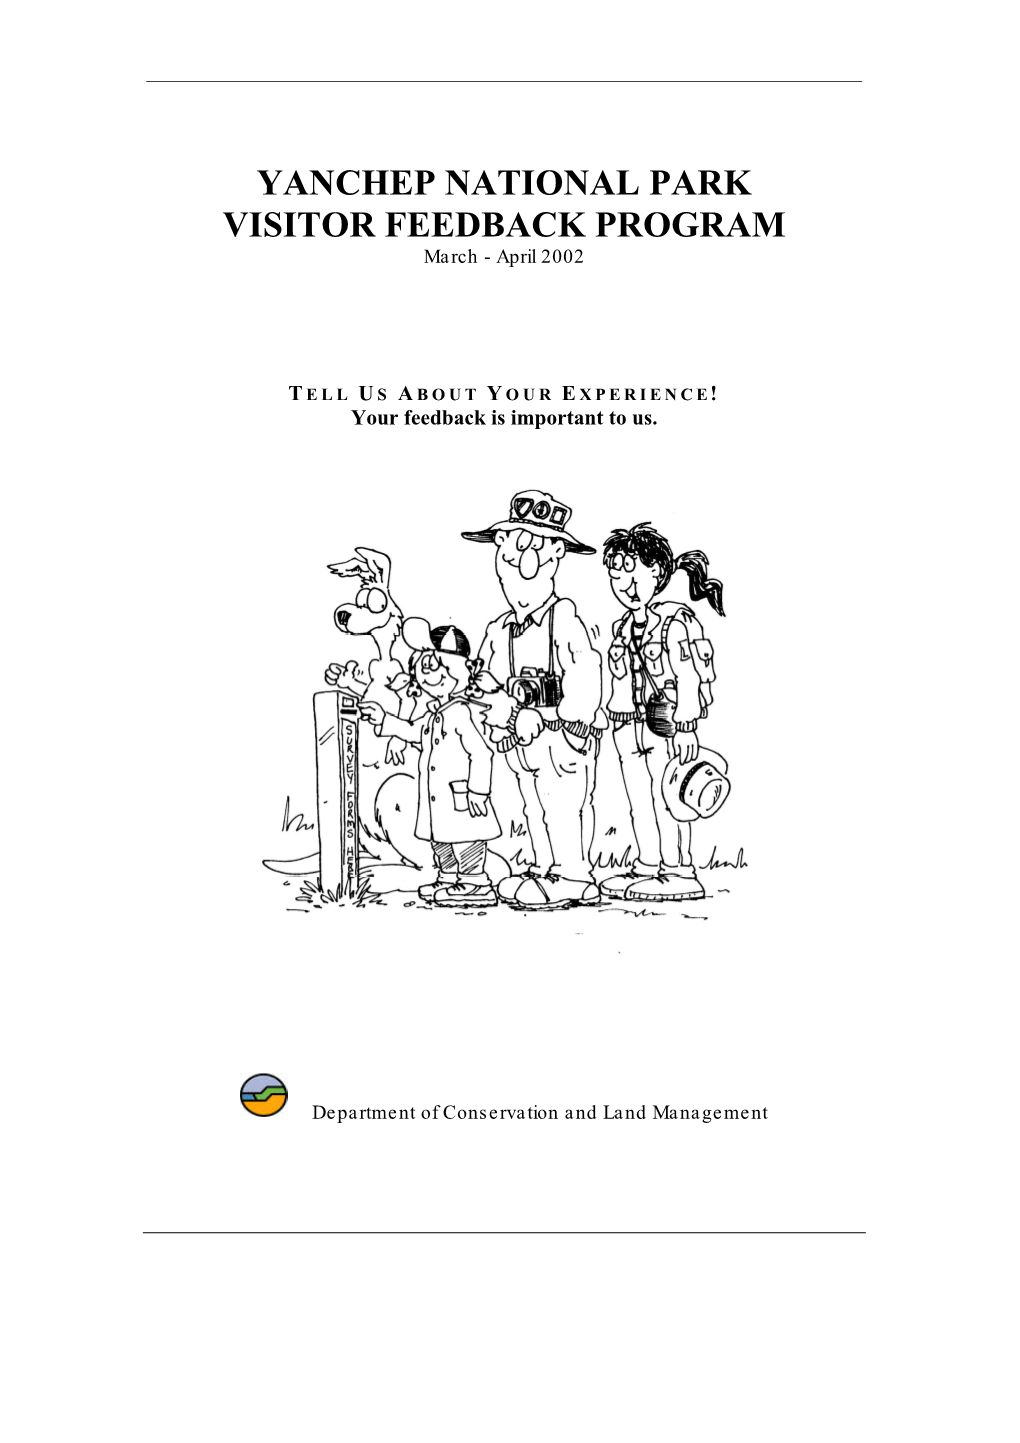 YANCHEP NATIONAL PARK VISITOR FEEDBACK PROGRAM March - April 2002